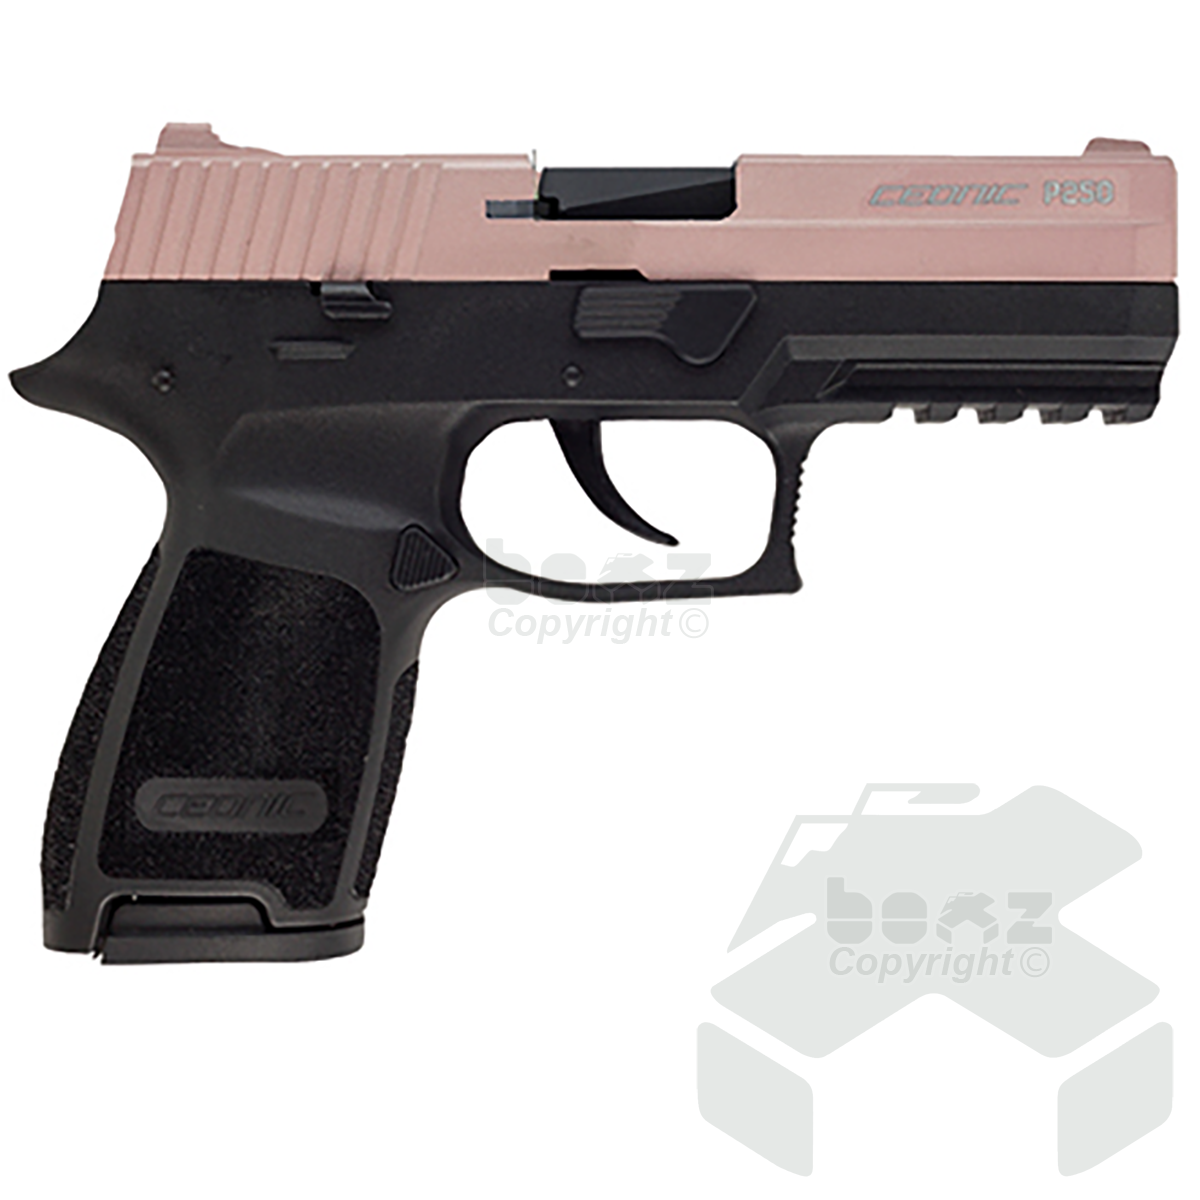 Ceonic P250 Blank Firing Pistol - 9mm - Pink Black